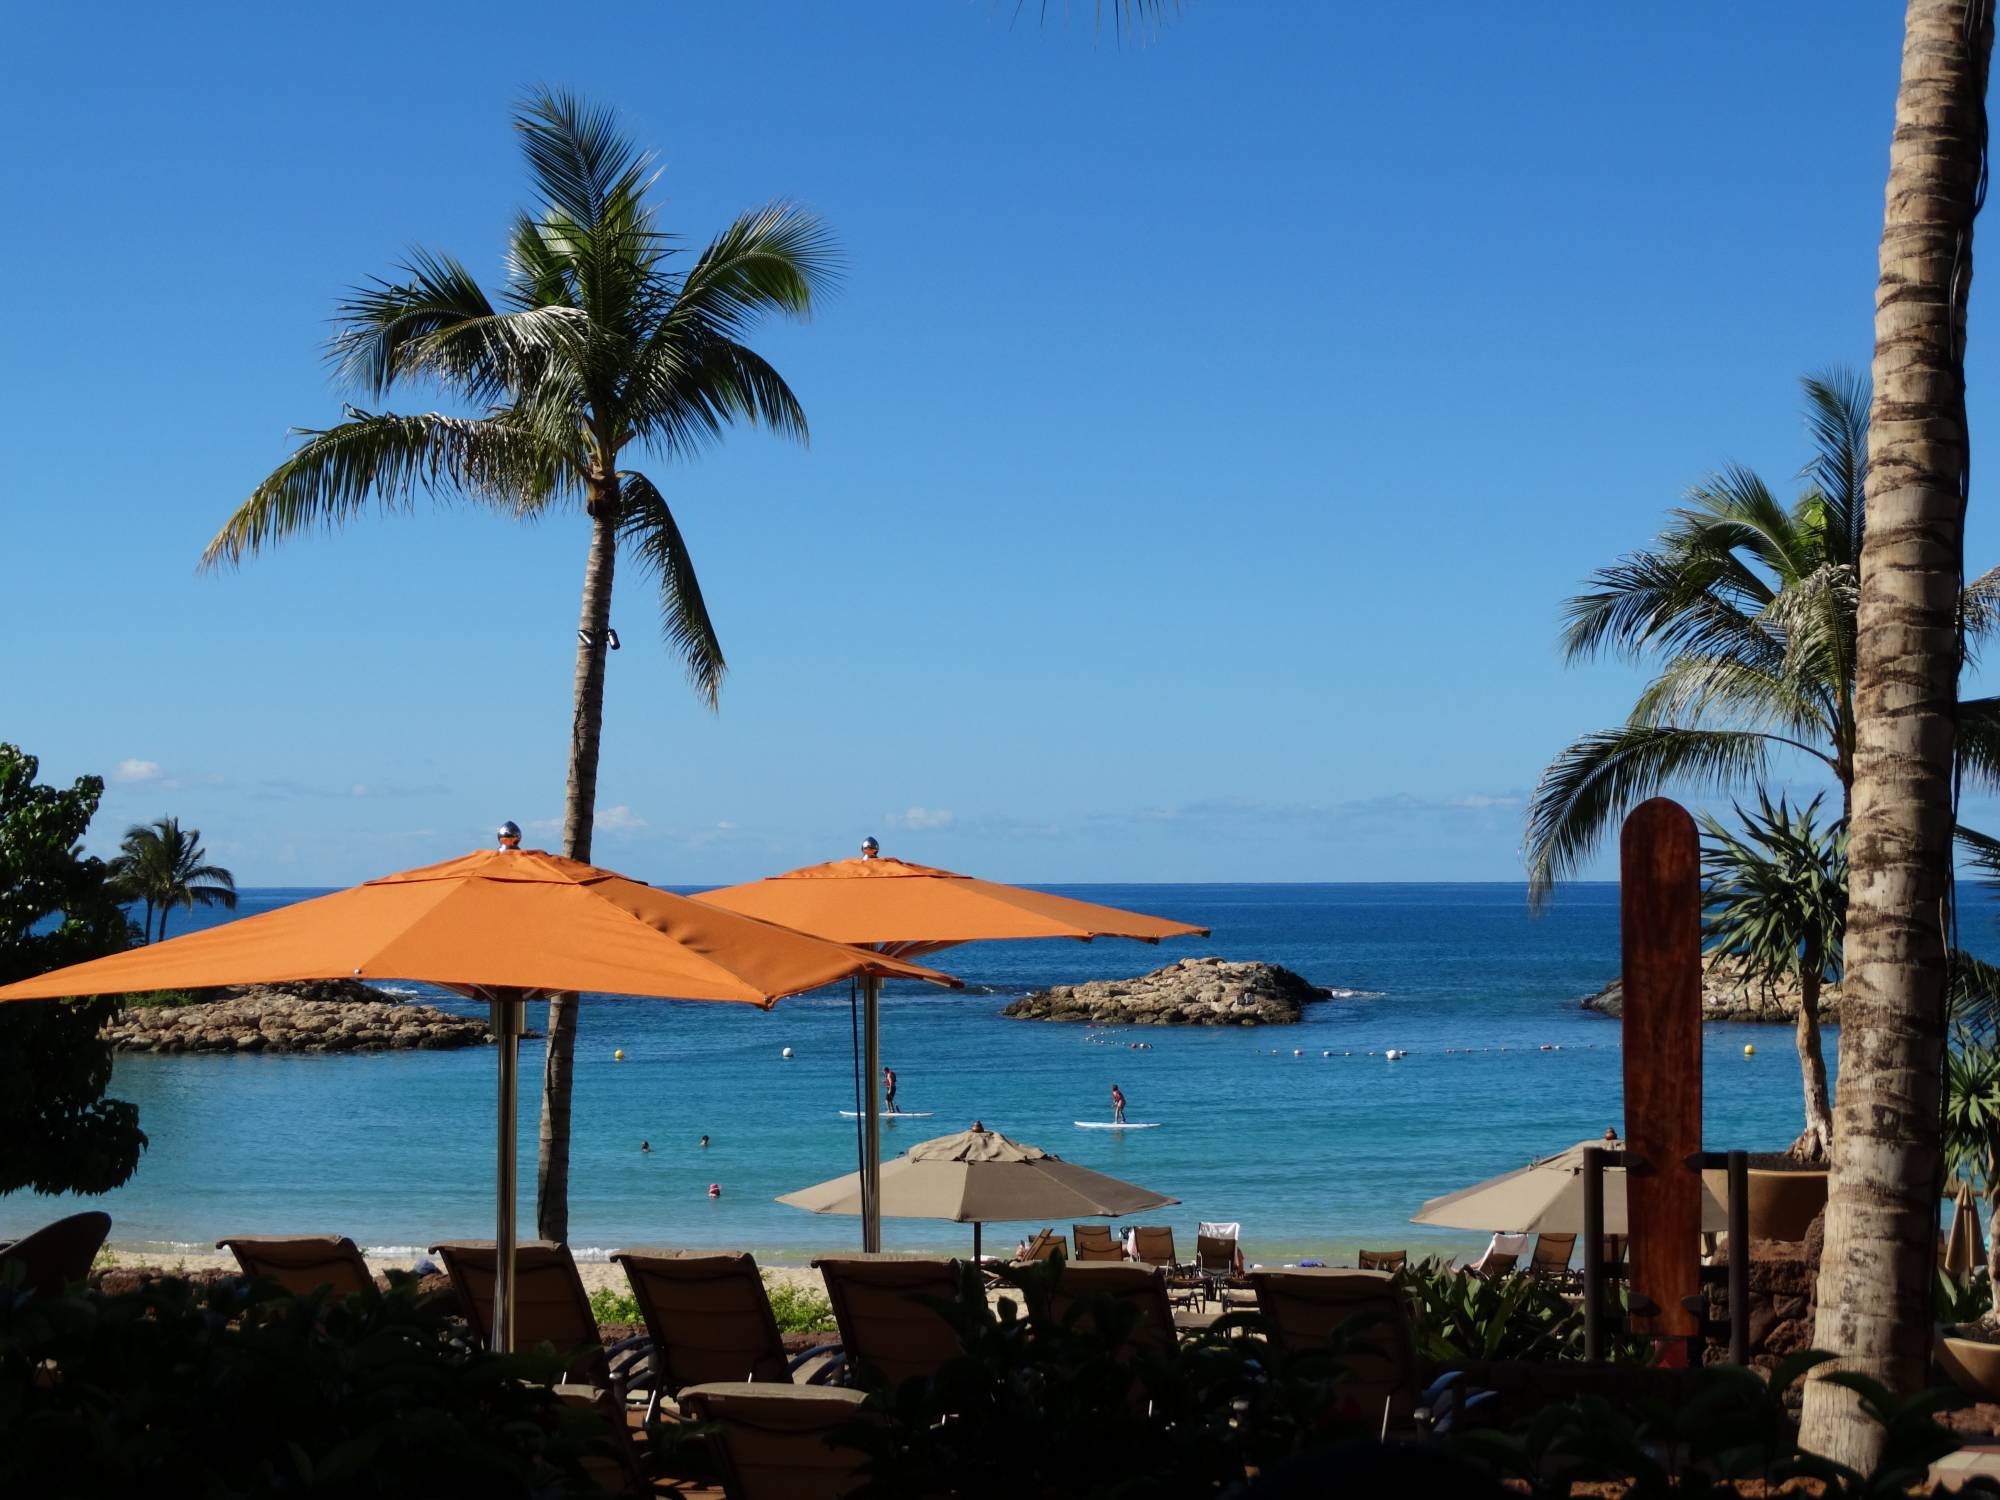 Enjoy fine Hawaiian cuisine at 'AMA'AMA at Aulani, a Disney Resort & Spa at Ko Olina |PassPorter.com